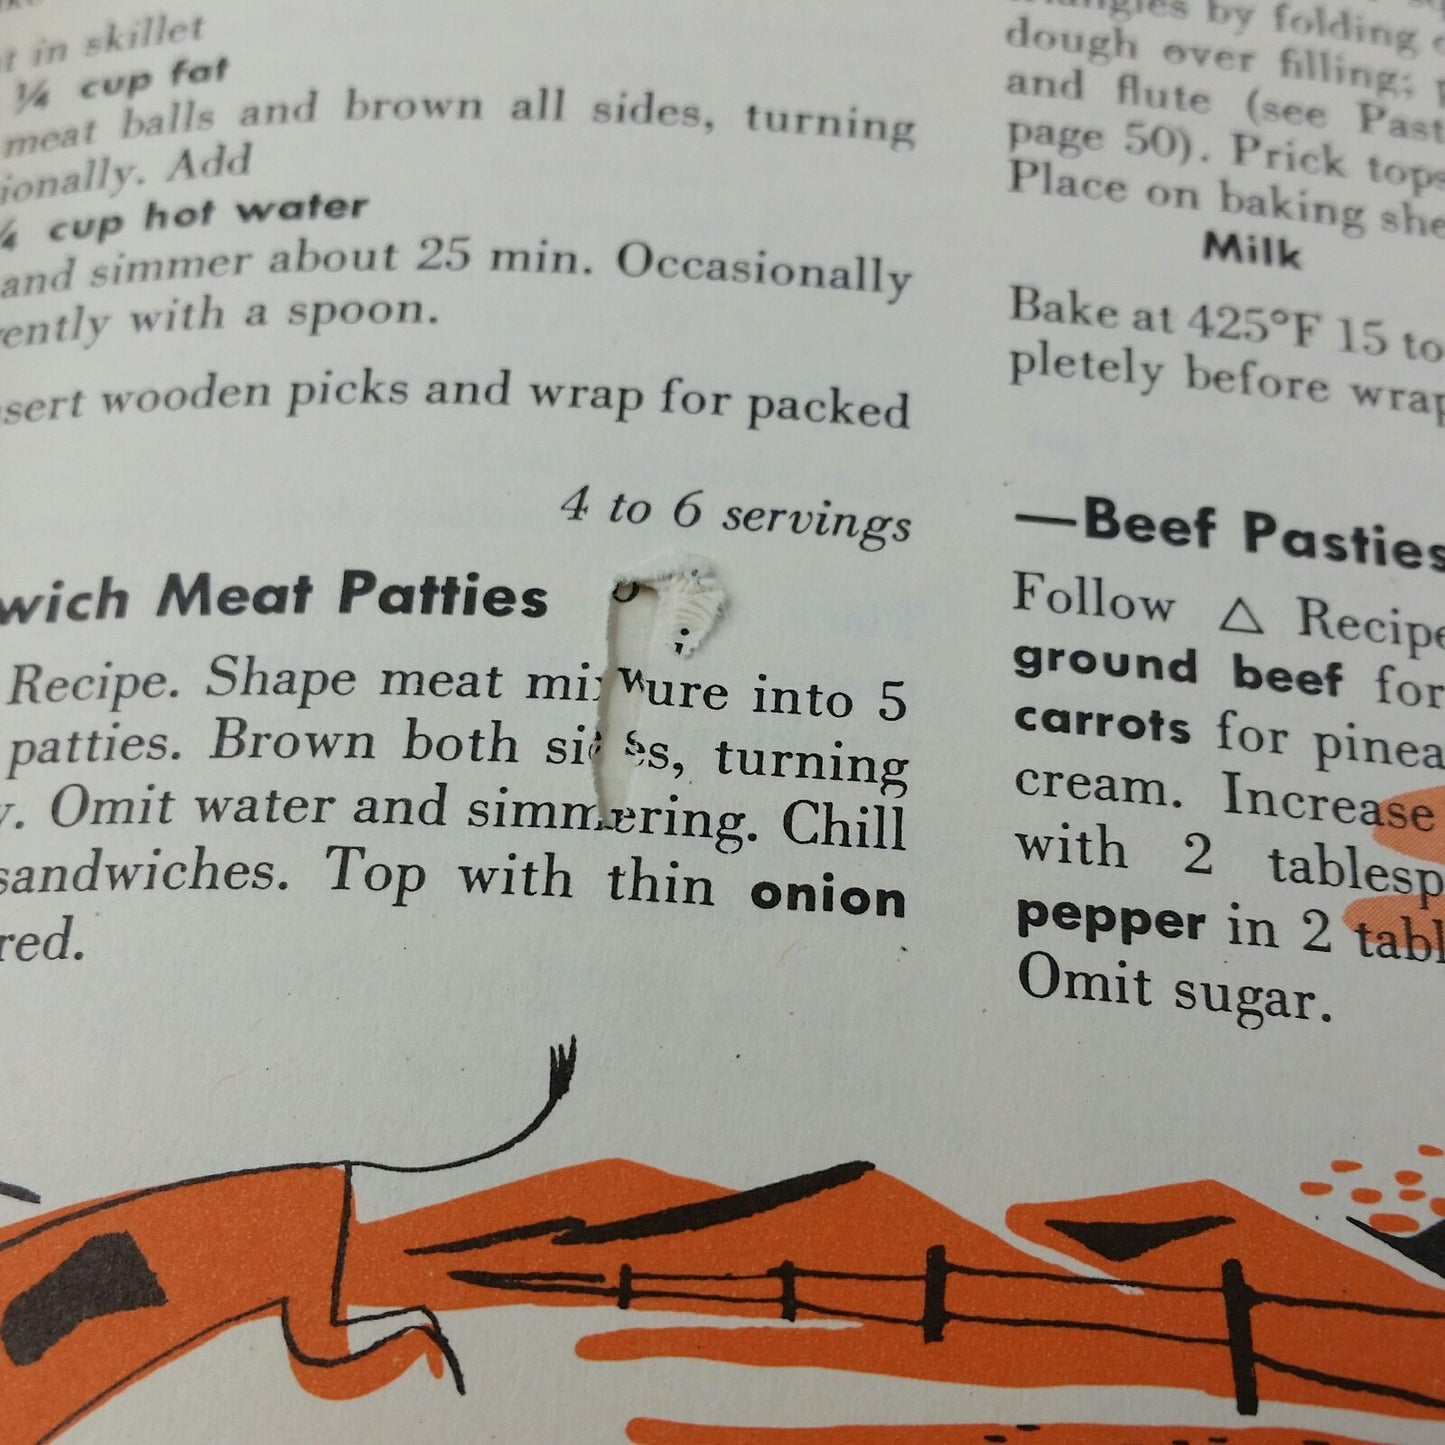 Vintage Cookbook Culinary Arts Institute Lunch Box Recipes 1954 Melanie De Proft - At Grandma's Table